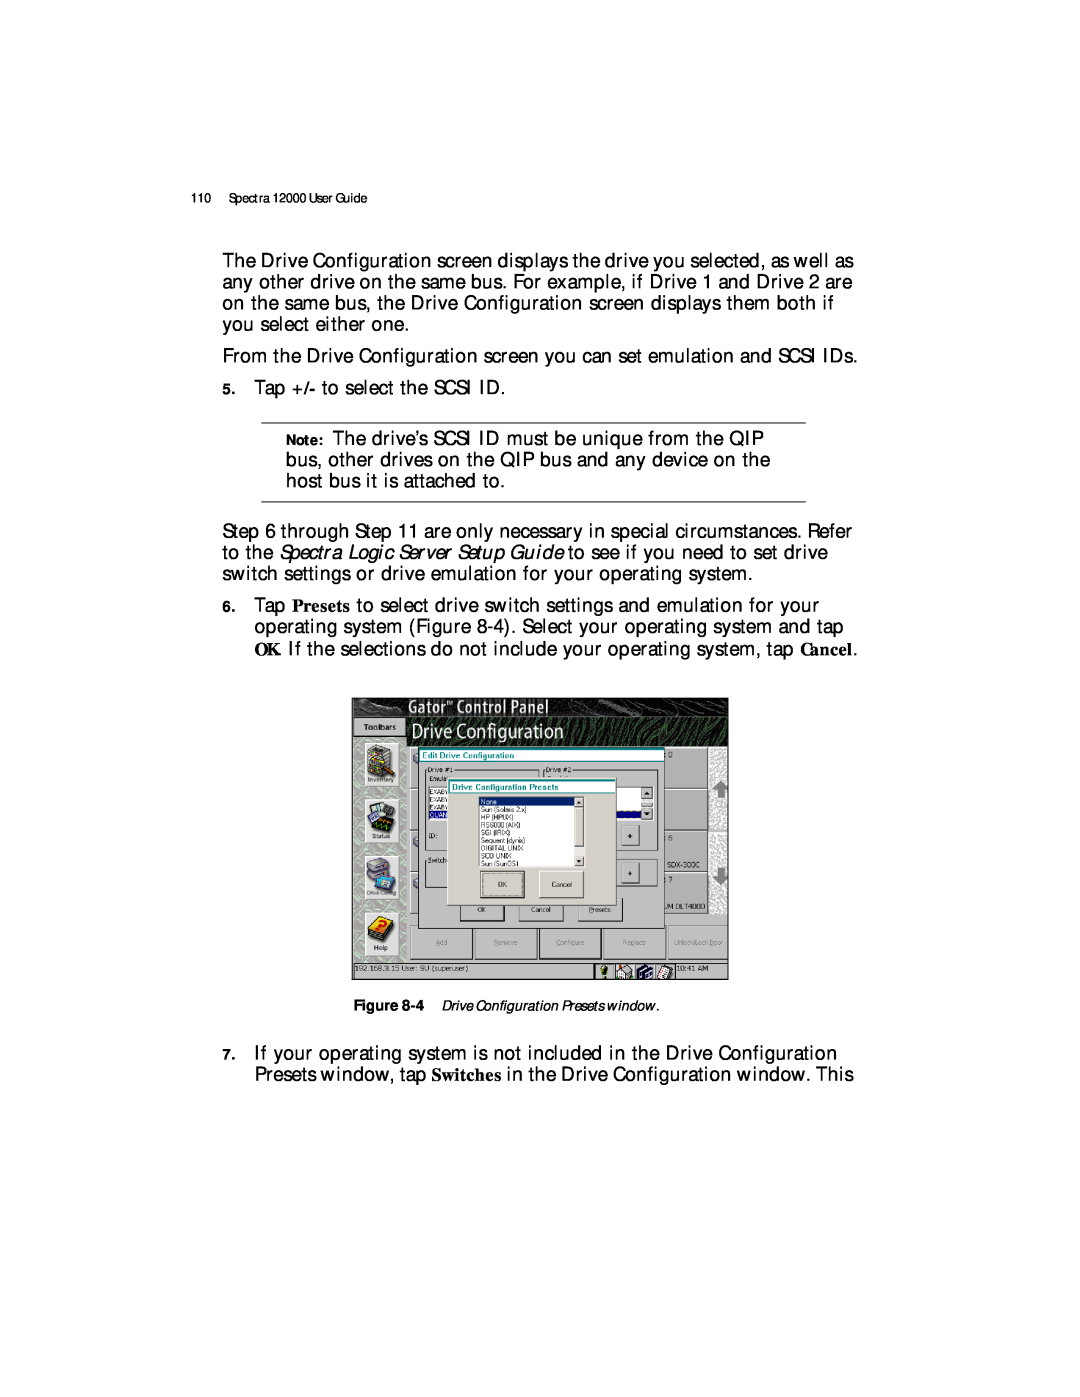 Spectra Logic Spectra 12000 manual 4 Drive Configuration Presets window 